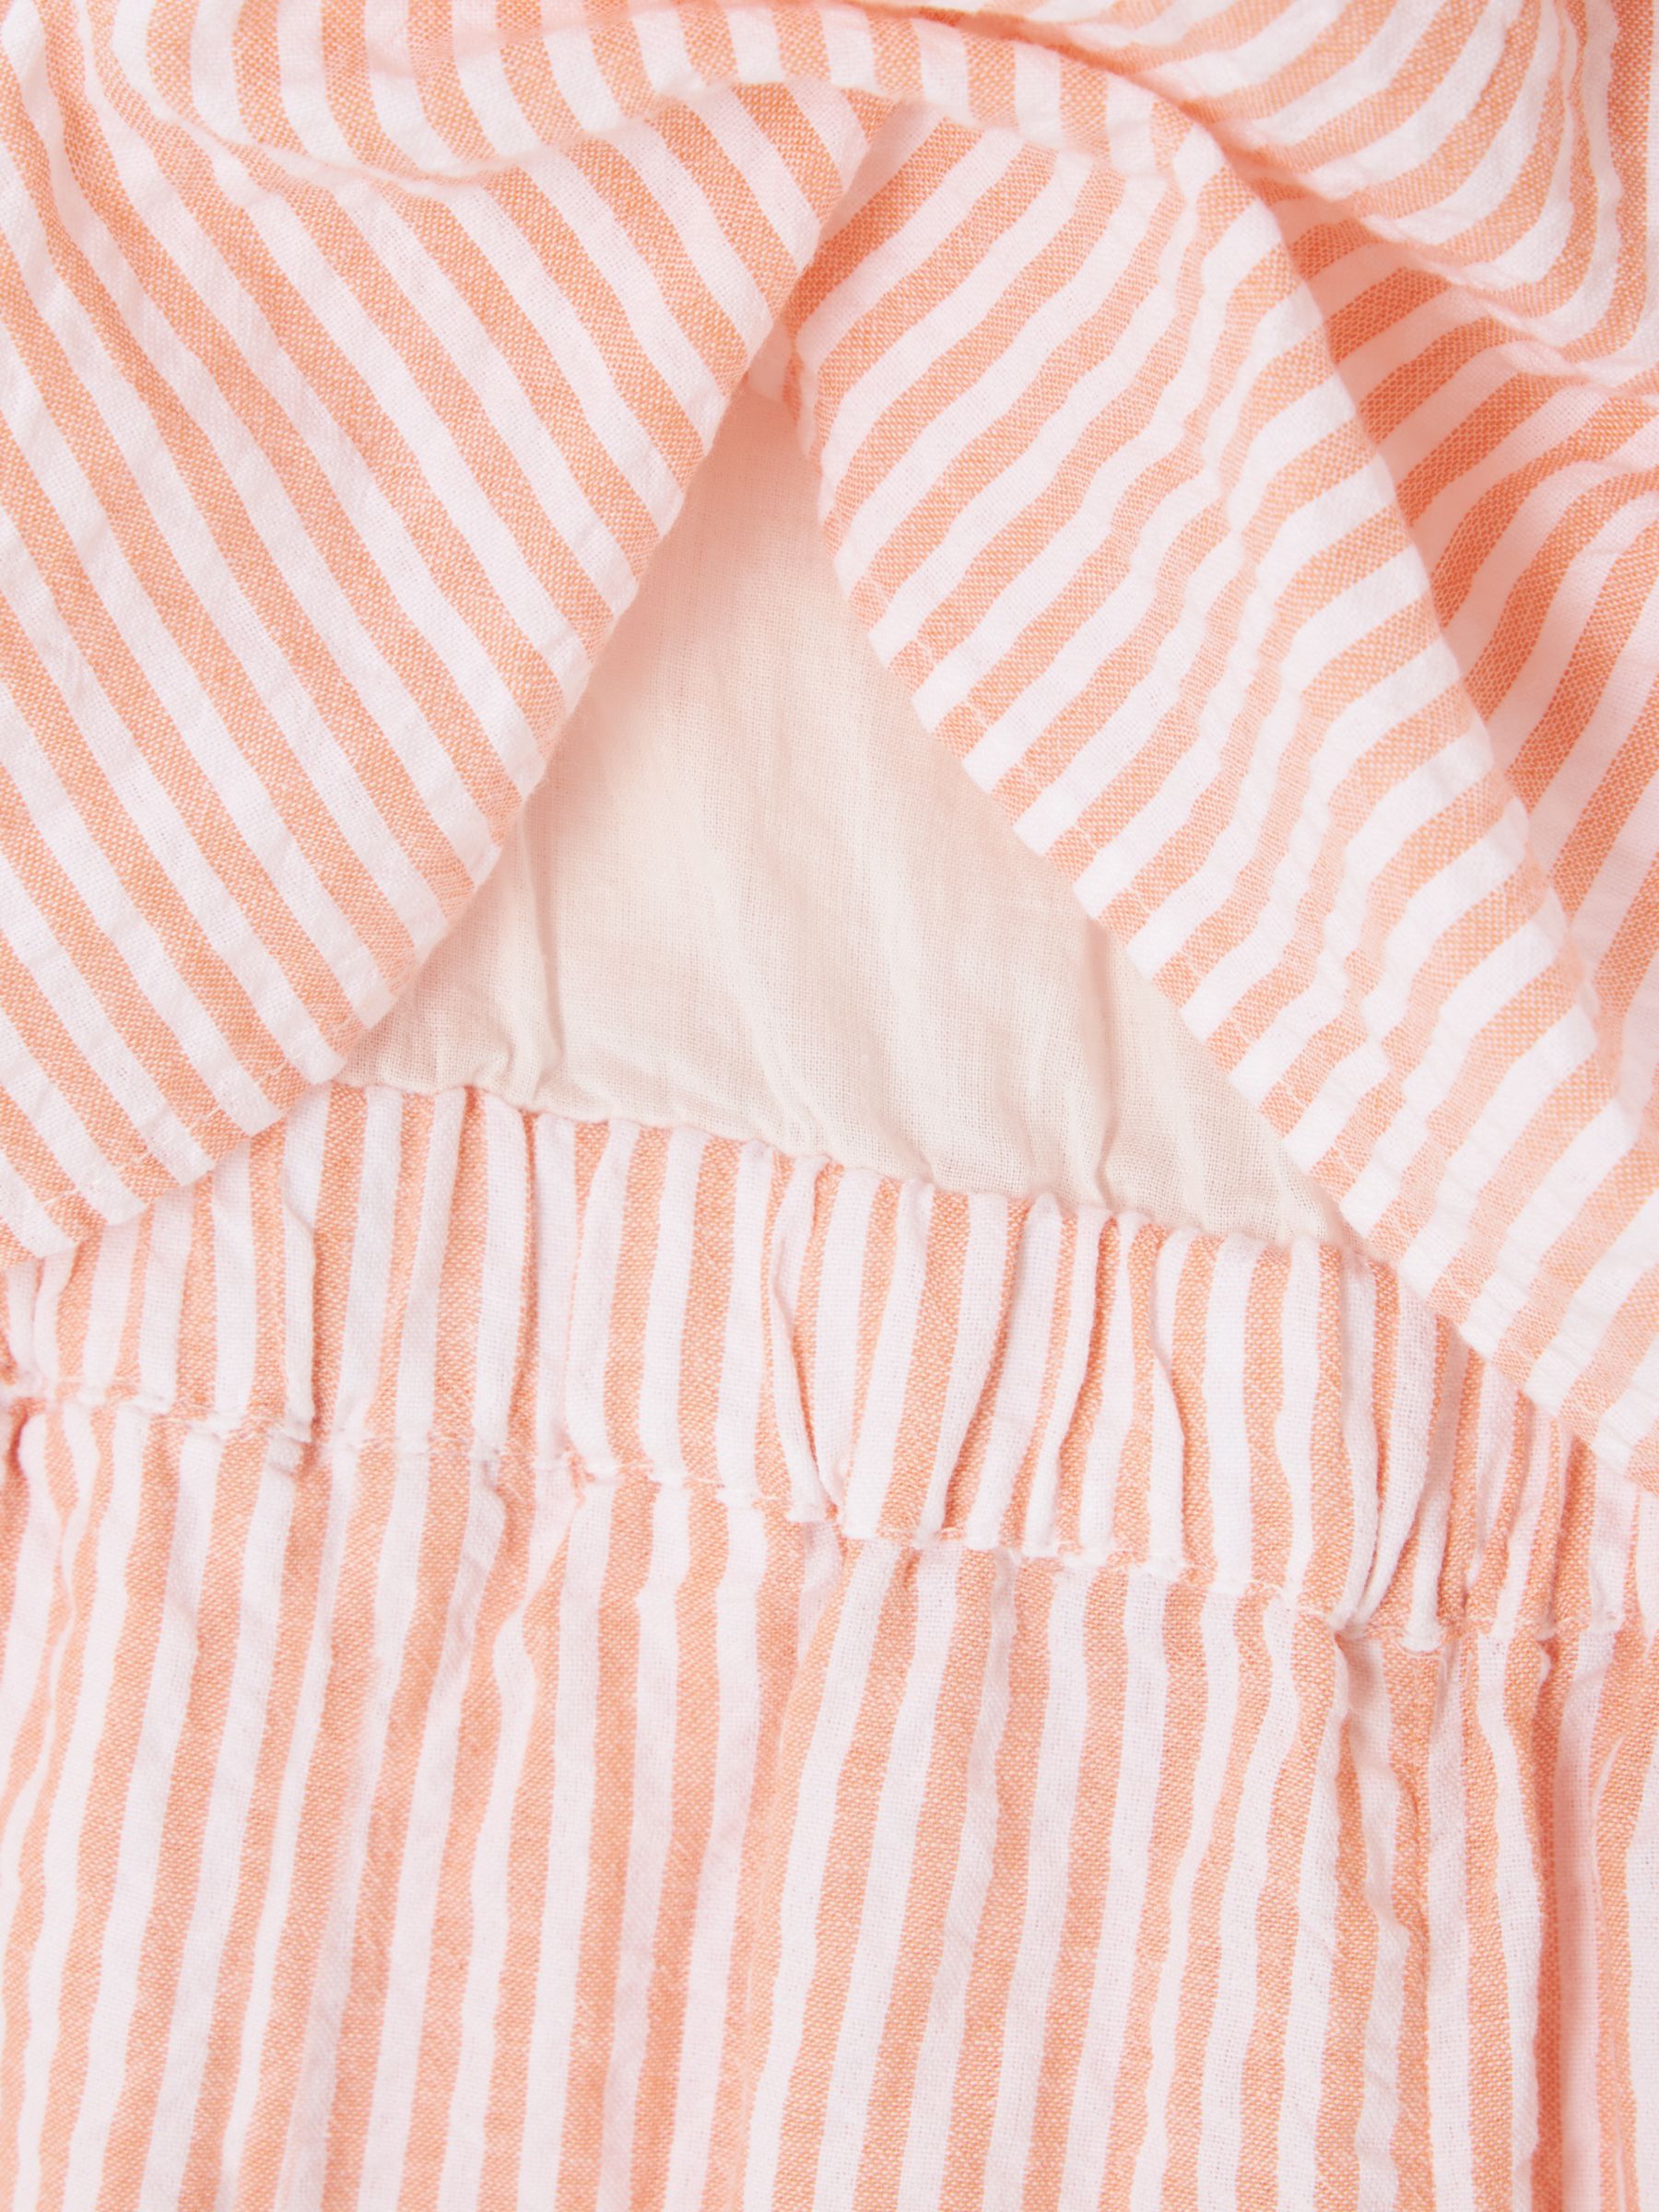 John Lewis Kids' Striped Playsuit, Peach Pink, 4 years